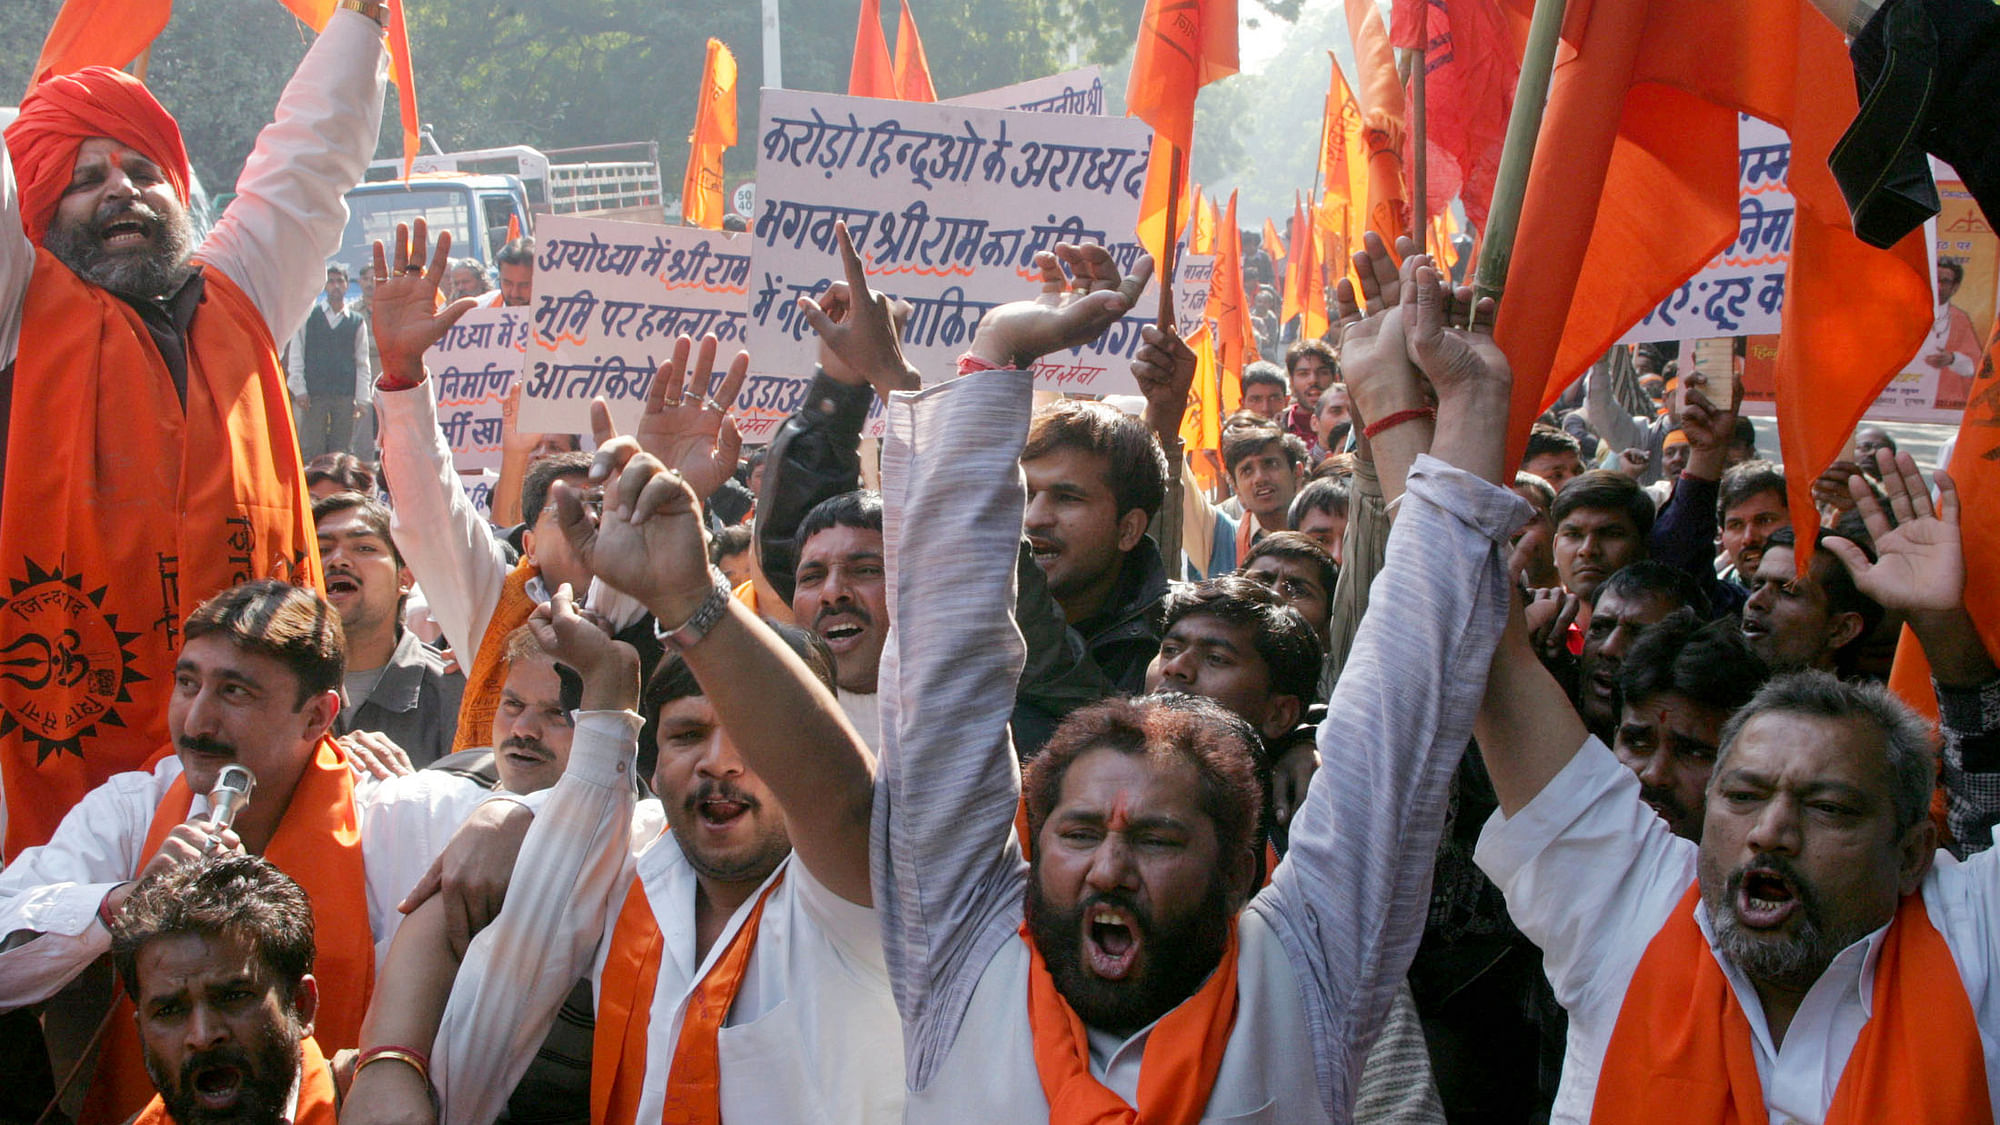 Shiv Sena members have been accused of harassing  minorities under the garb of ultra nationalist “Bharat mata Ki Jai” movement. Photo: Reuters)